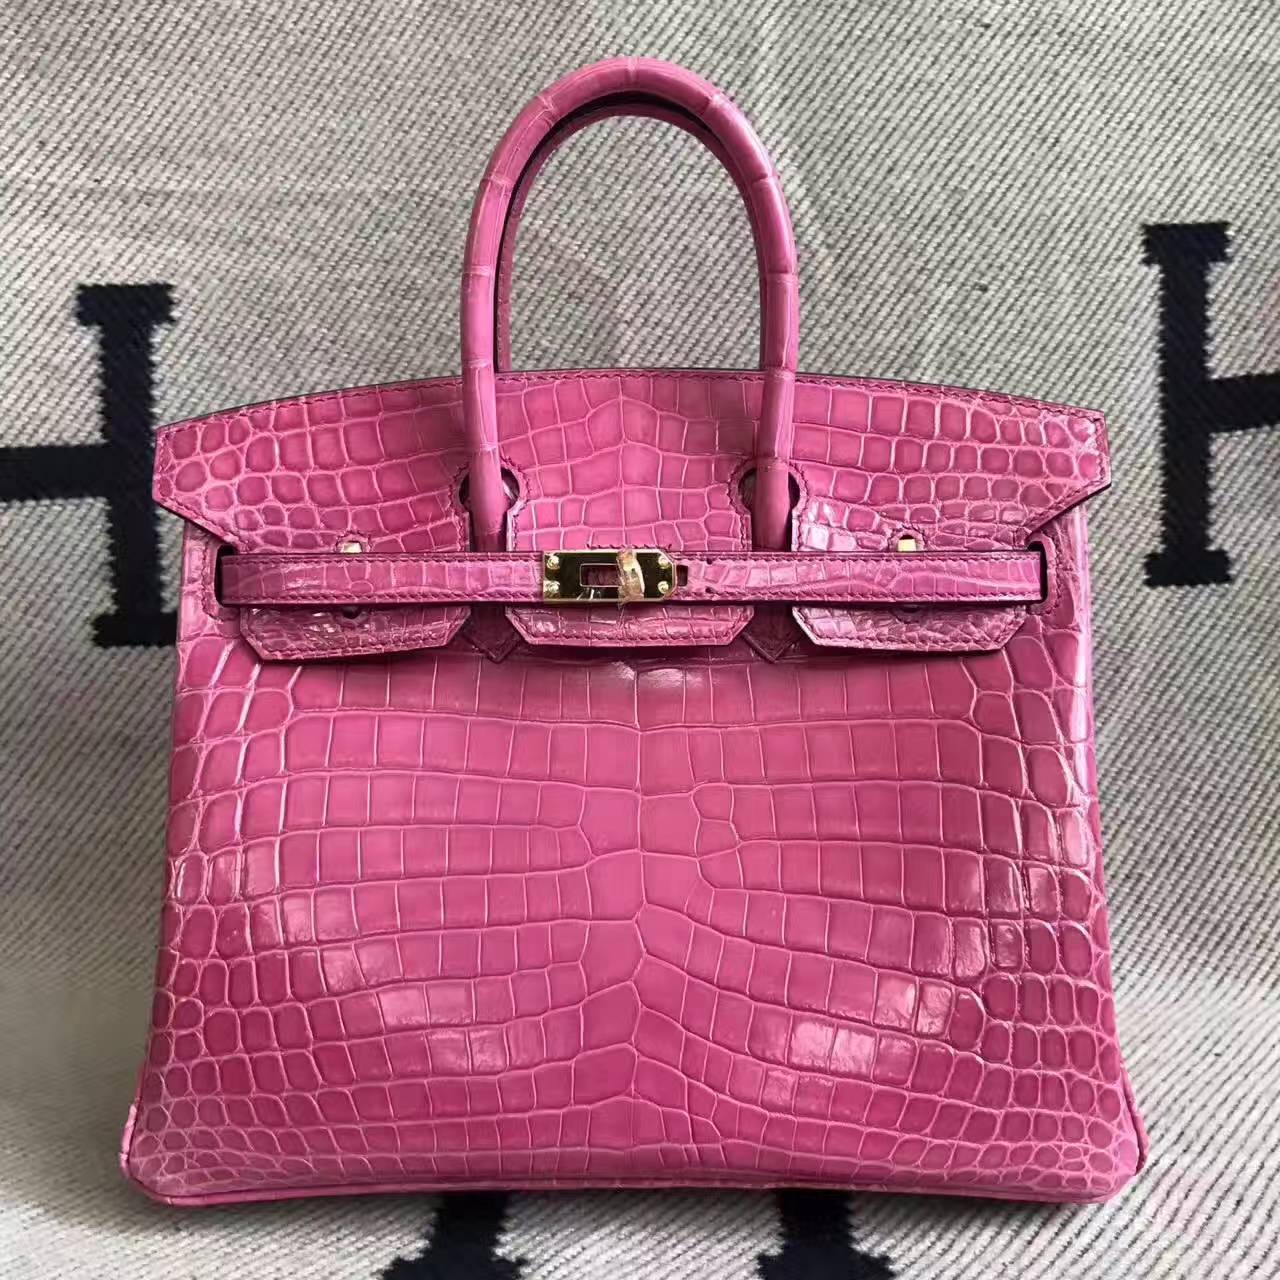 Luxury Hermes Shiny Crocodile Leather Birkin Bag 25cm in 5E Hot Pink — Hermes Crocodile Birkin Bag